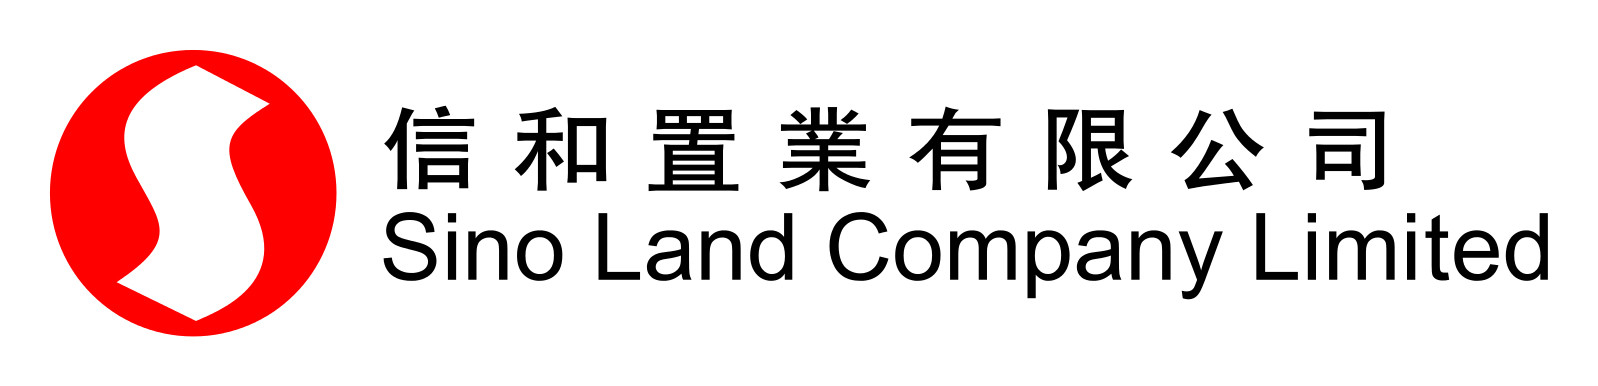 Asia co ltd. Sino логотип. Sino Polymer логотип. BYD Company Limited лого компании. Лагатип Сино.